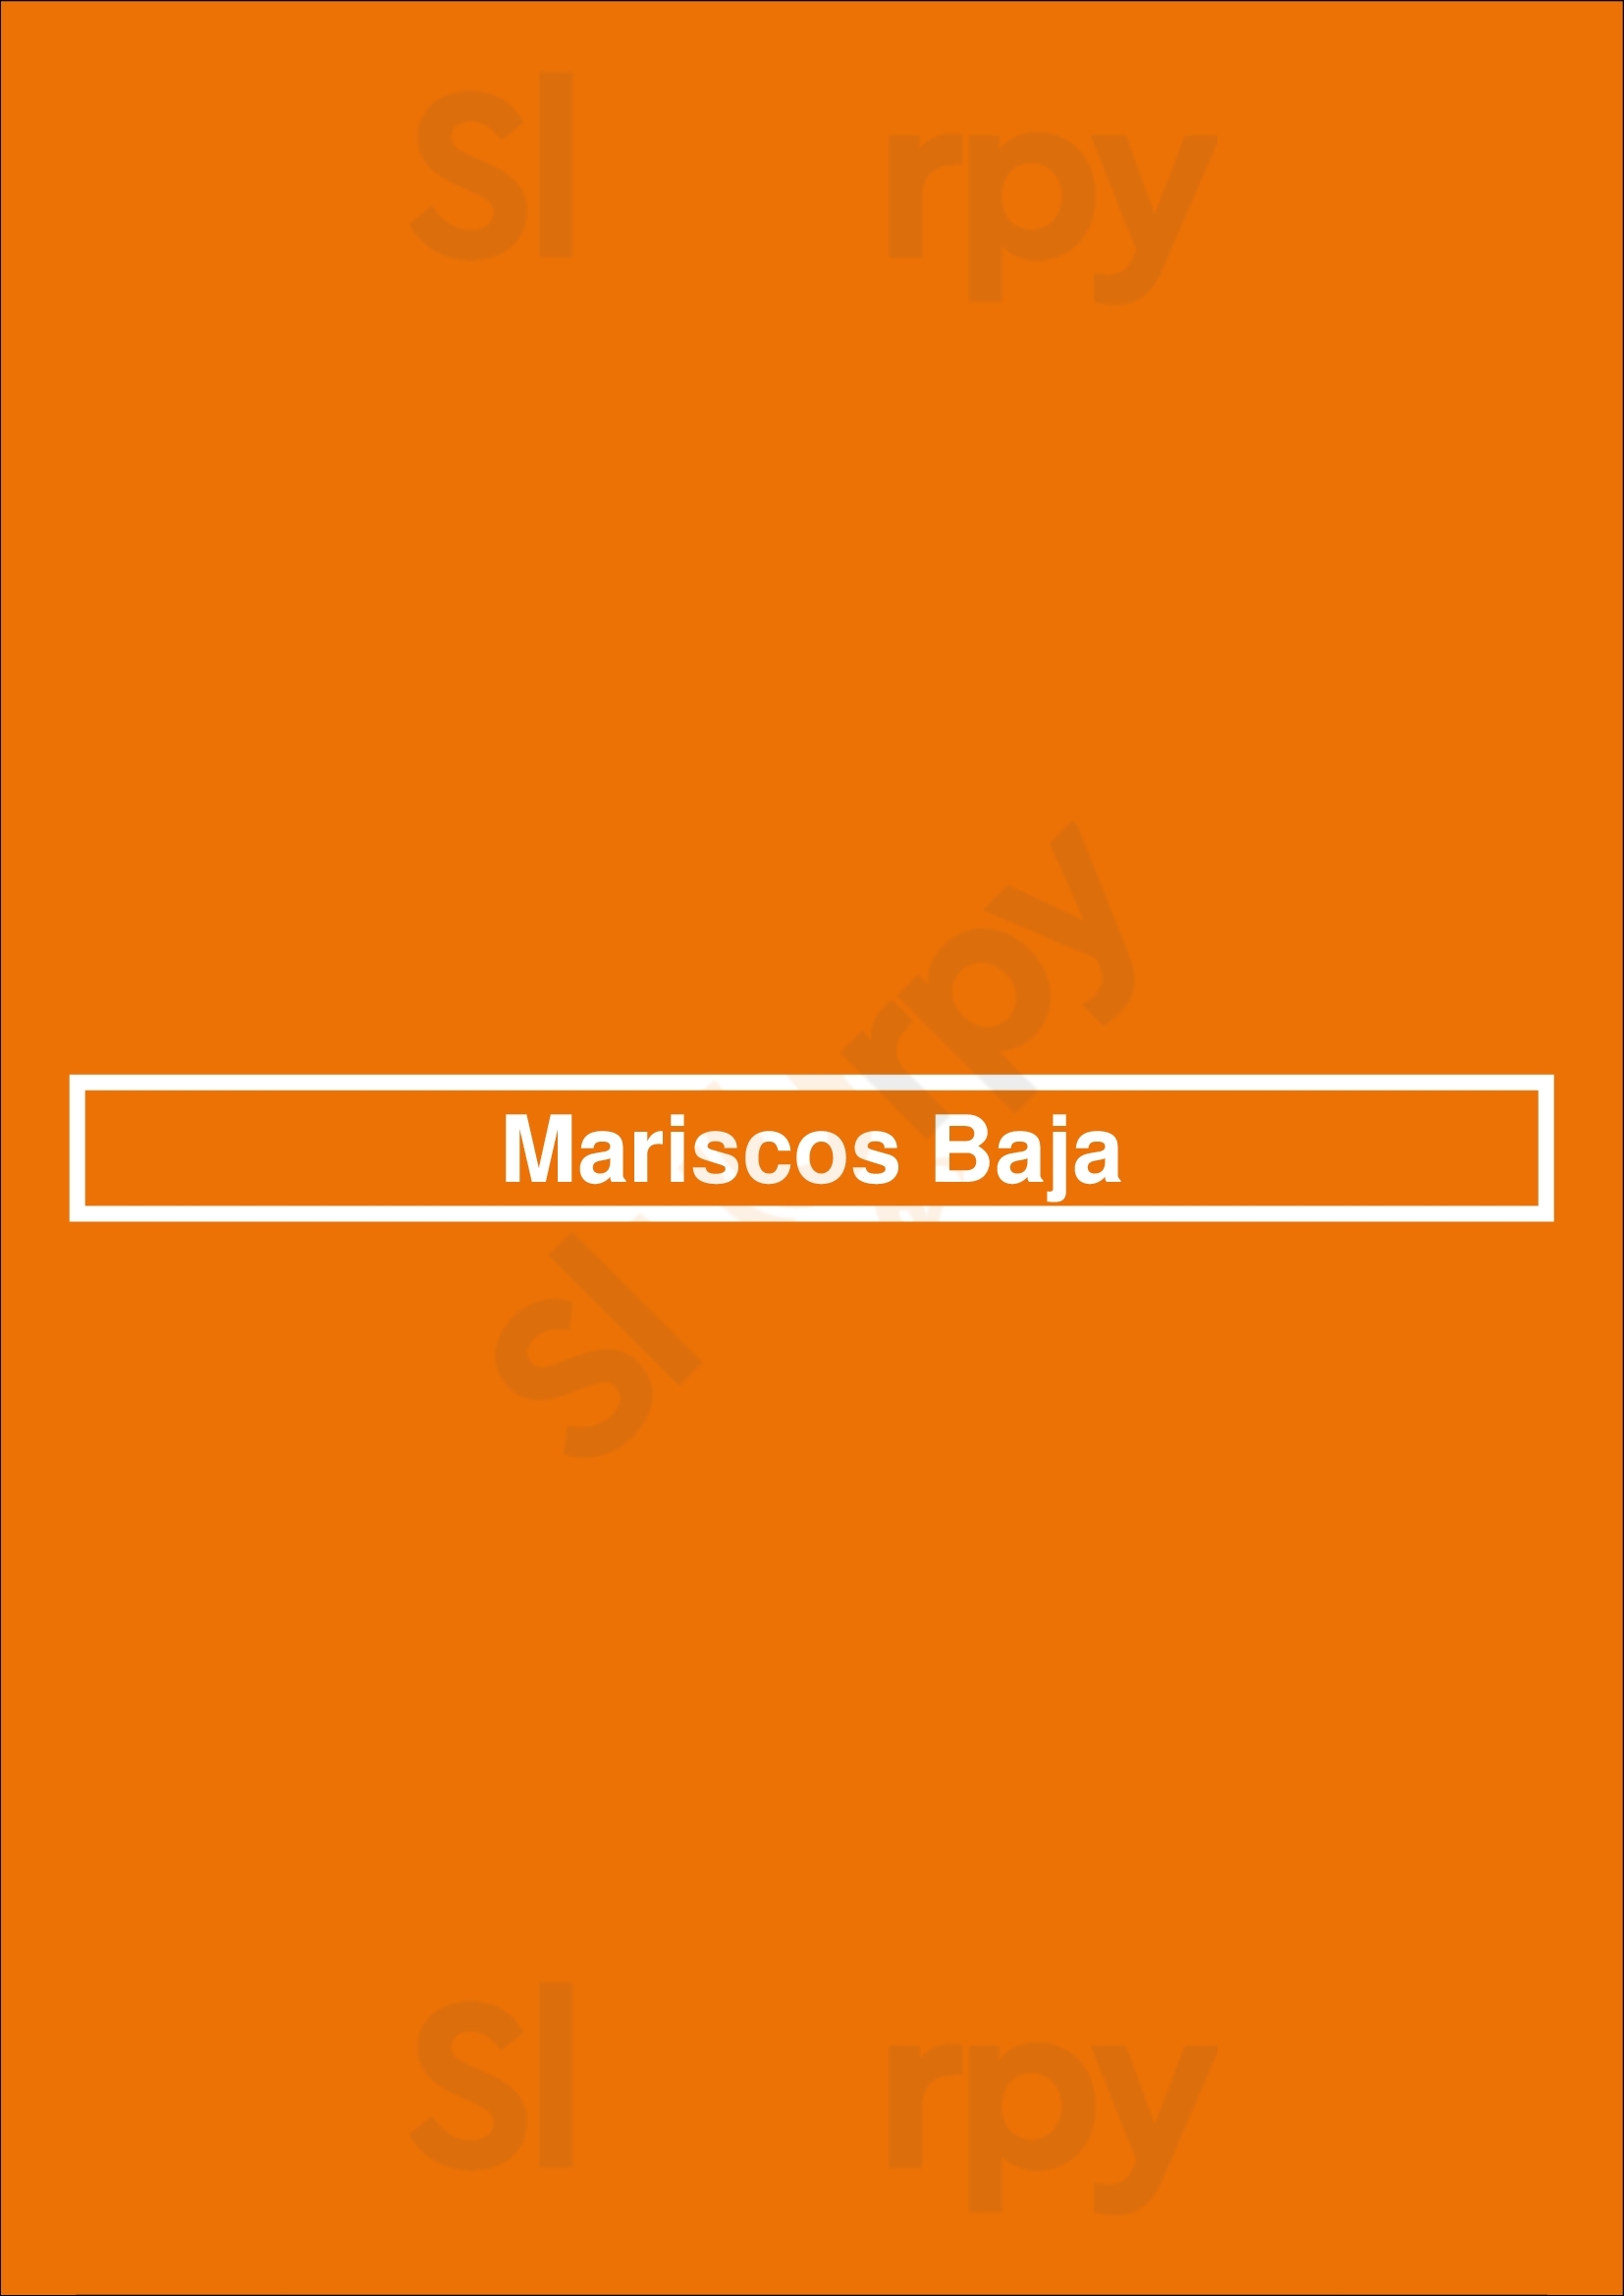 Mariscos Baja Pomona Menu - 1